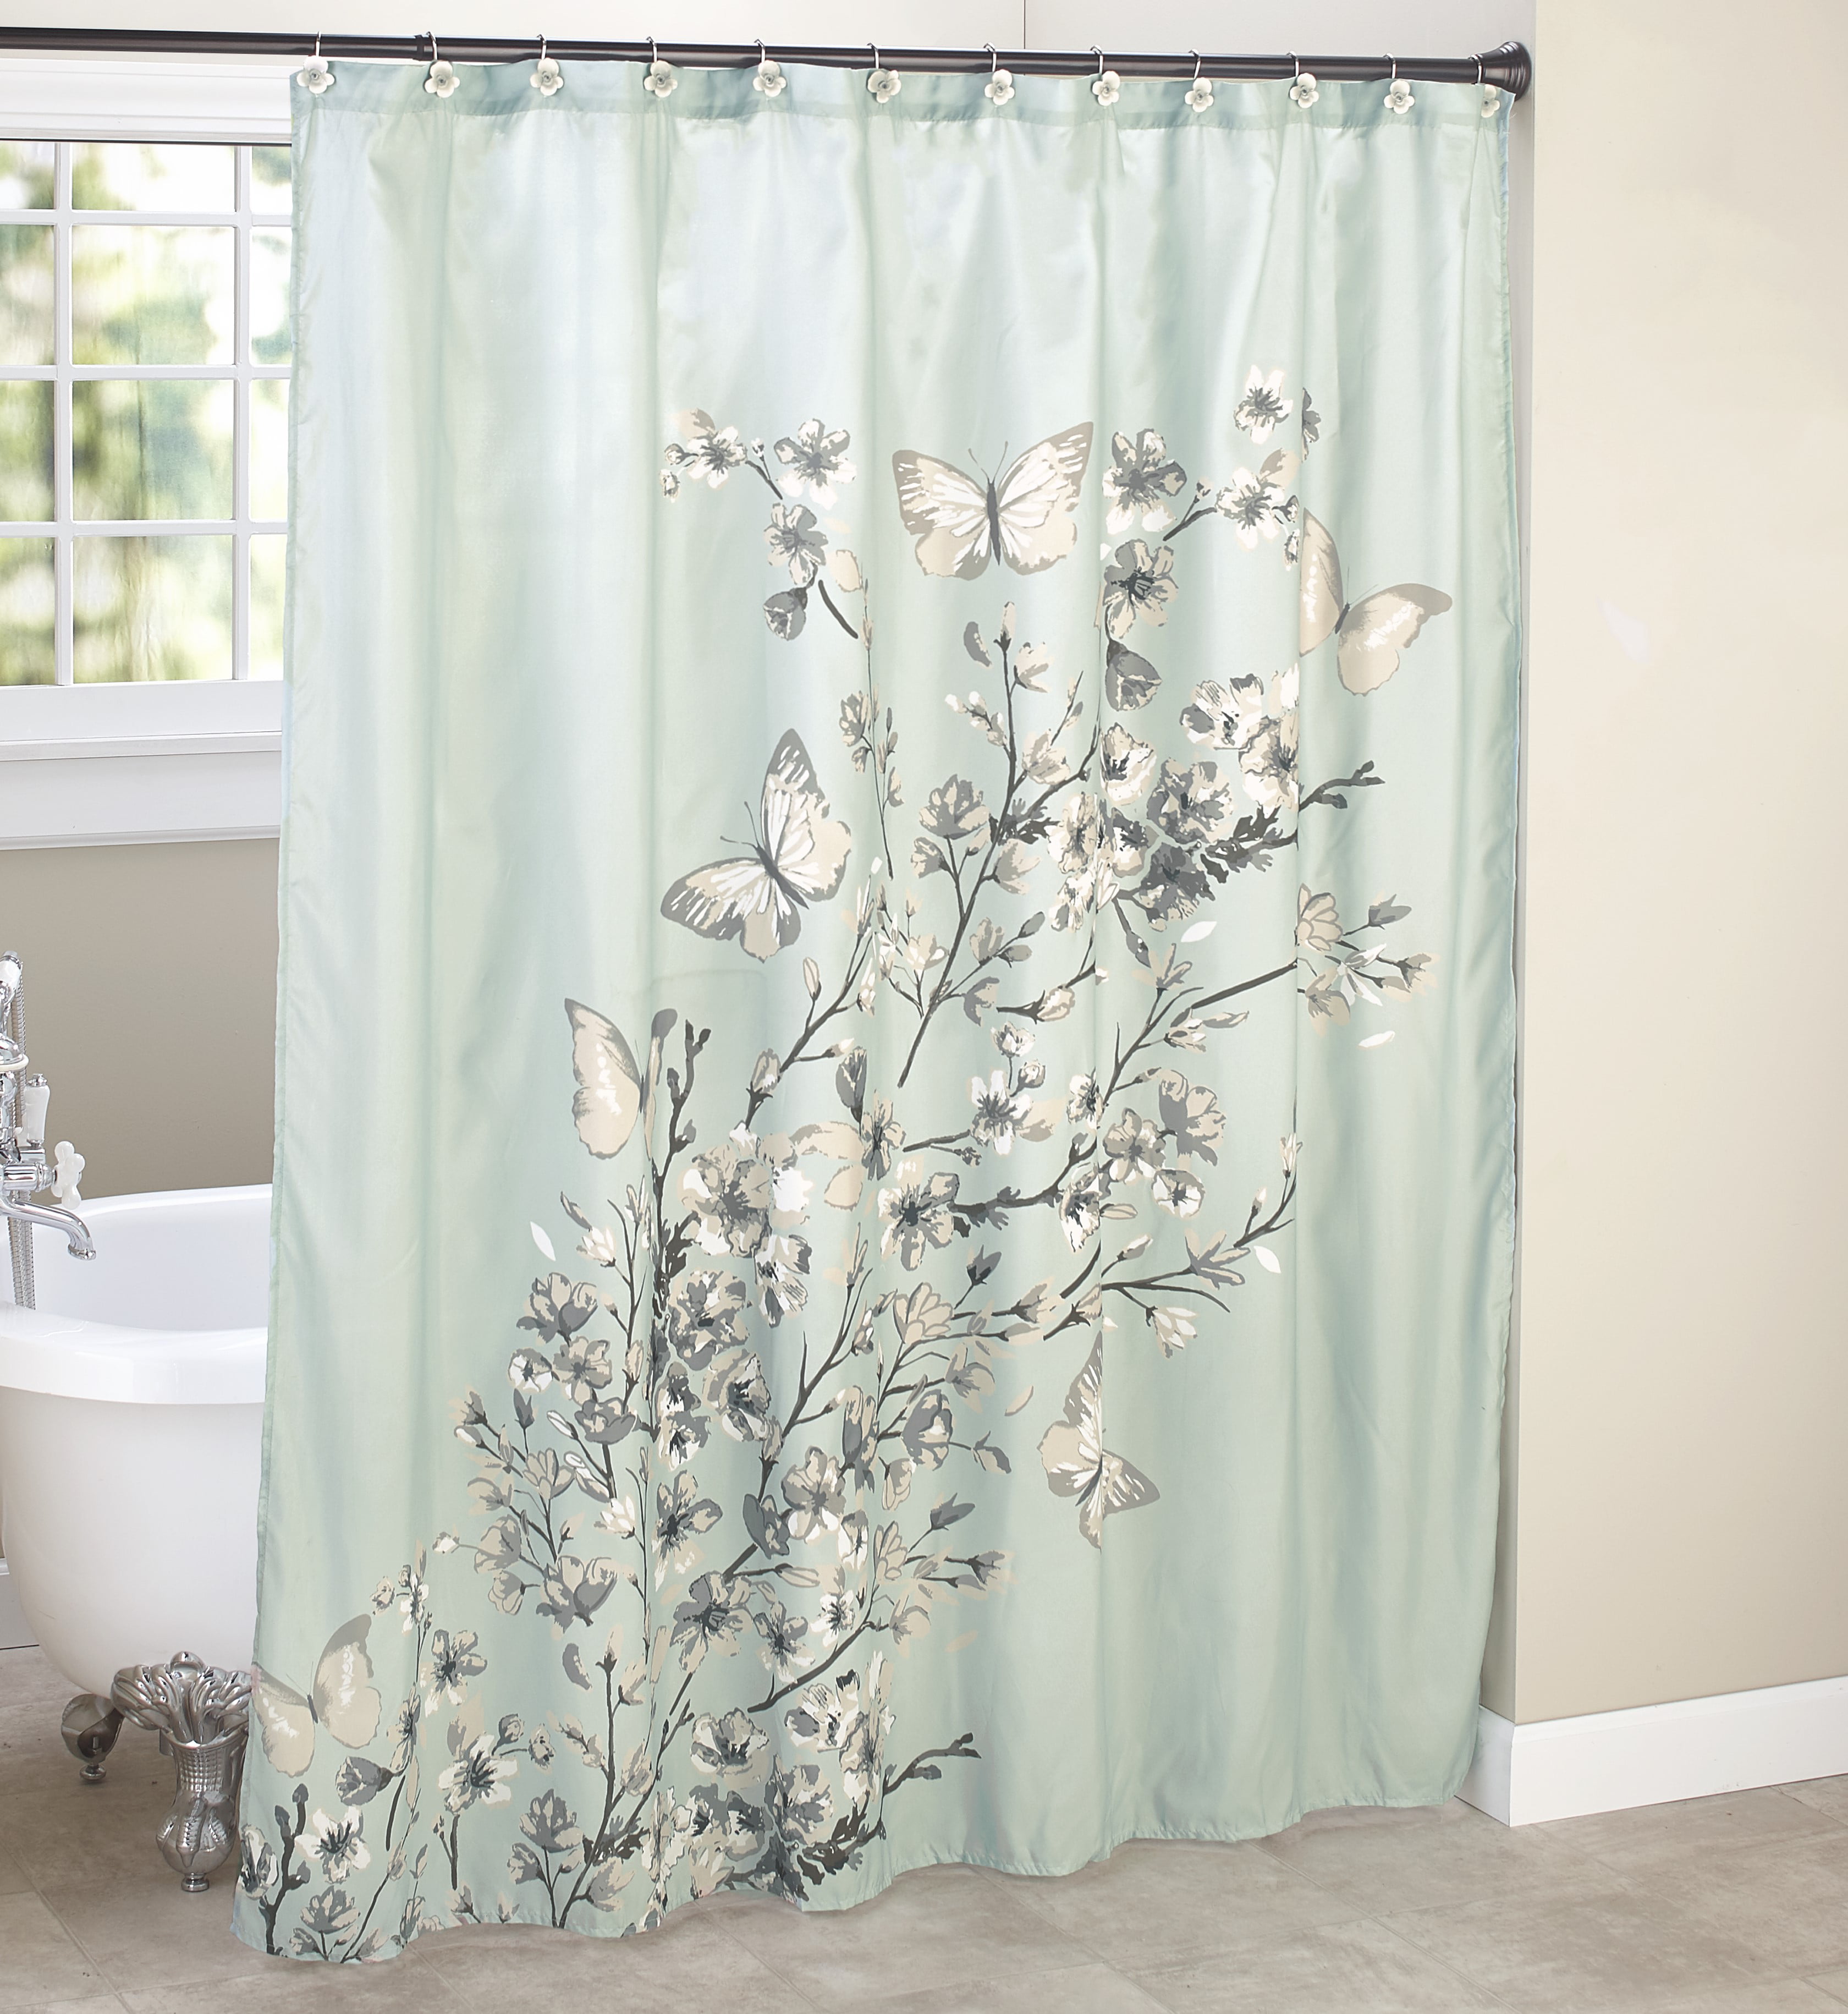 Cherry Blossoms Water Scenery Bathroom Waterproof Fabric Shower Curtain Set 72" 